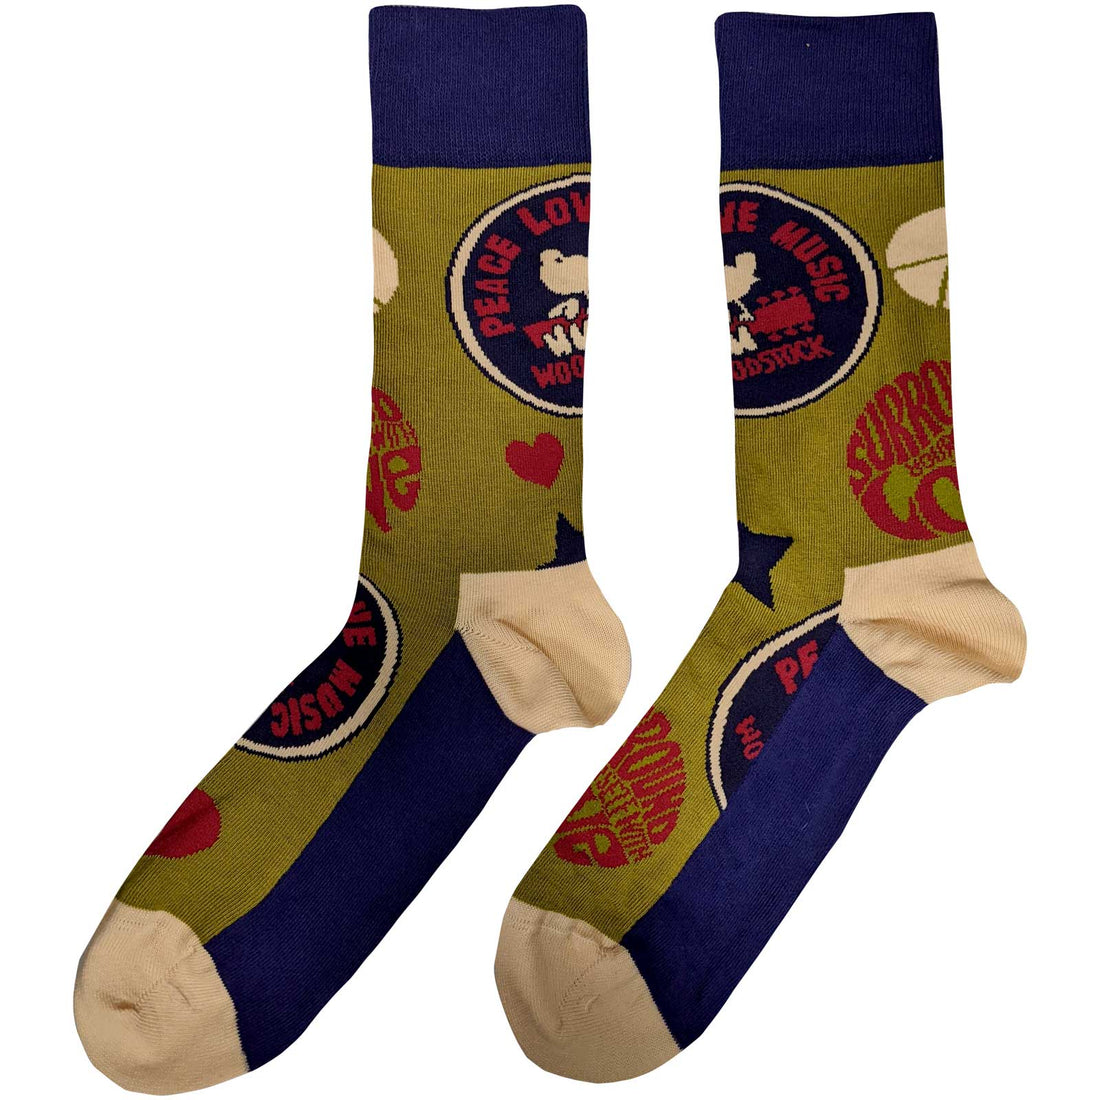 Woodstock Unisex Ankle Socks: Peace - Love - Music (UK Size 7 - 11)